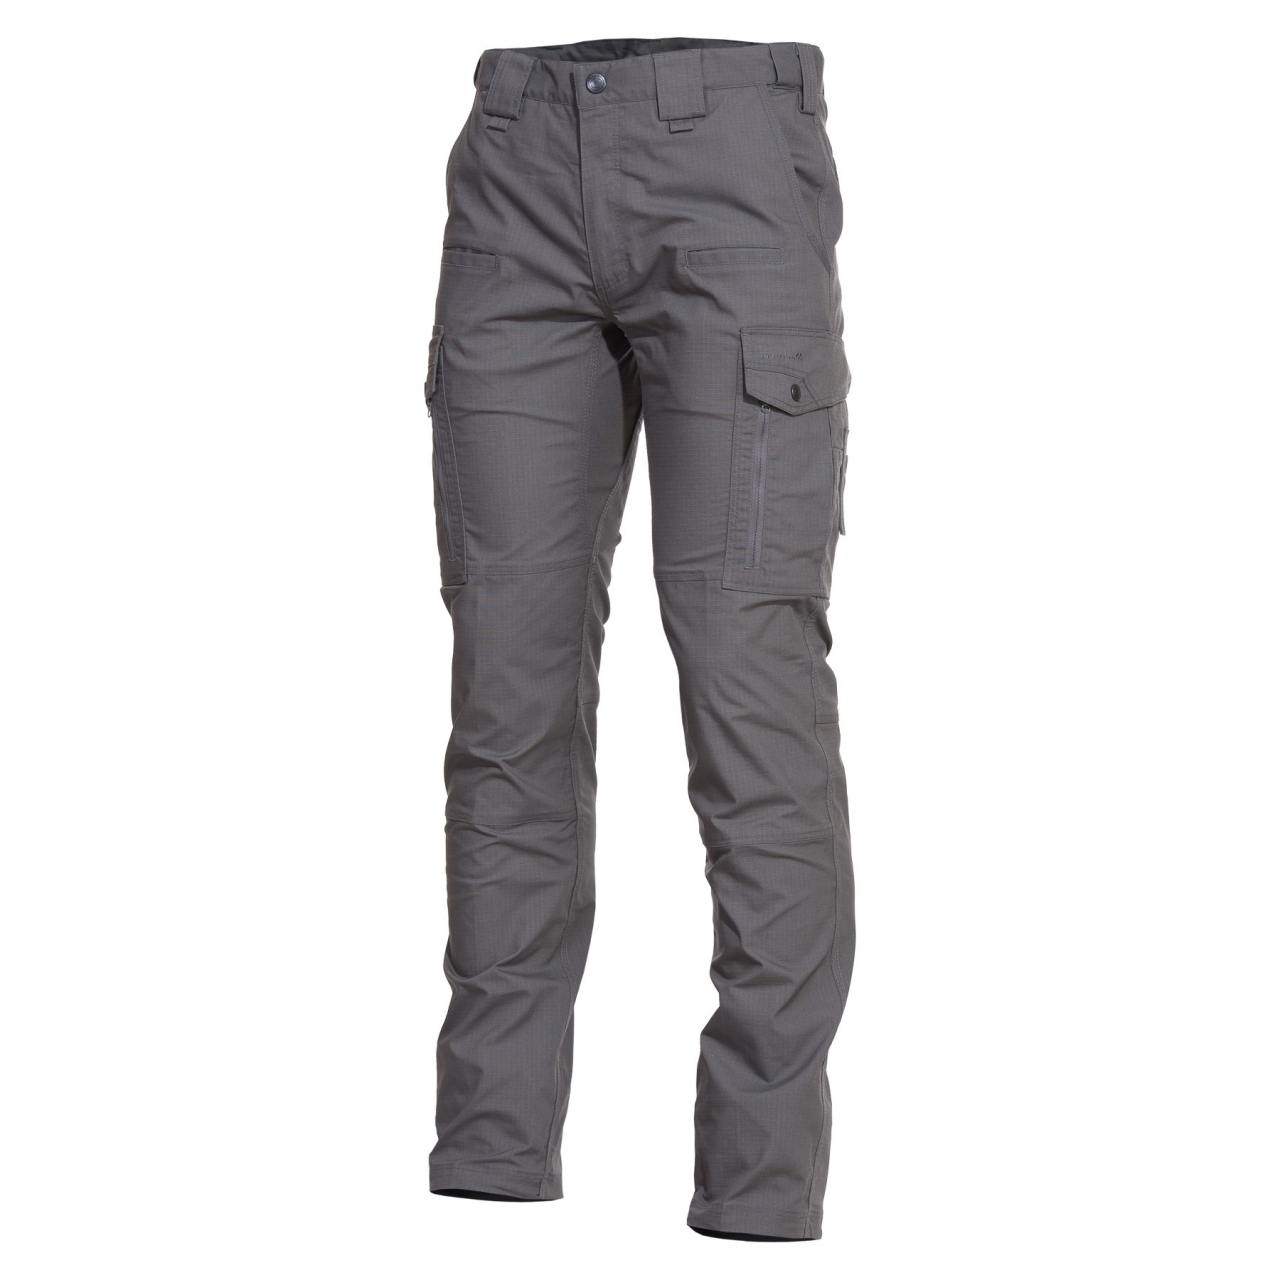 Kalhoty Pentagon Ranger 2.0 - šedé, 60 L